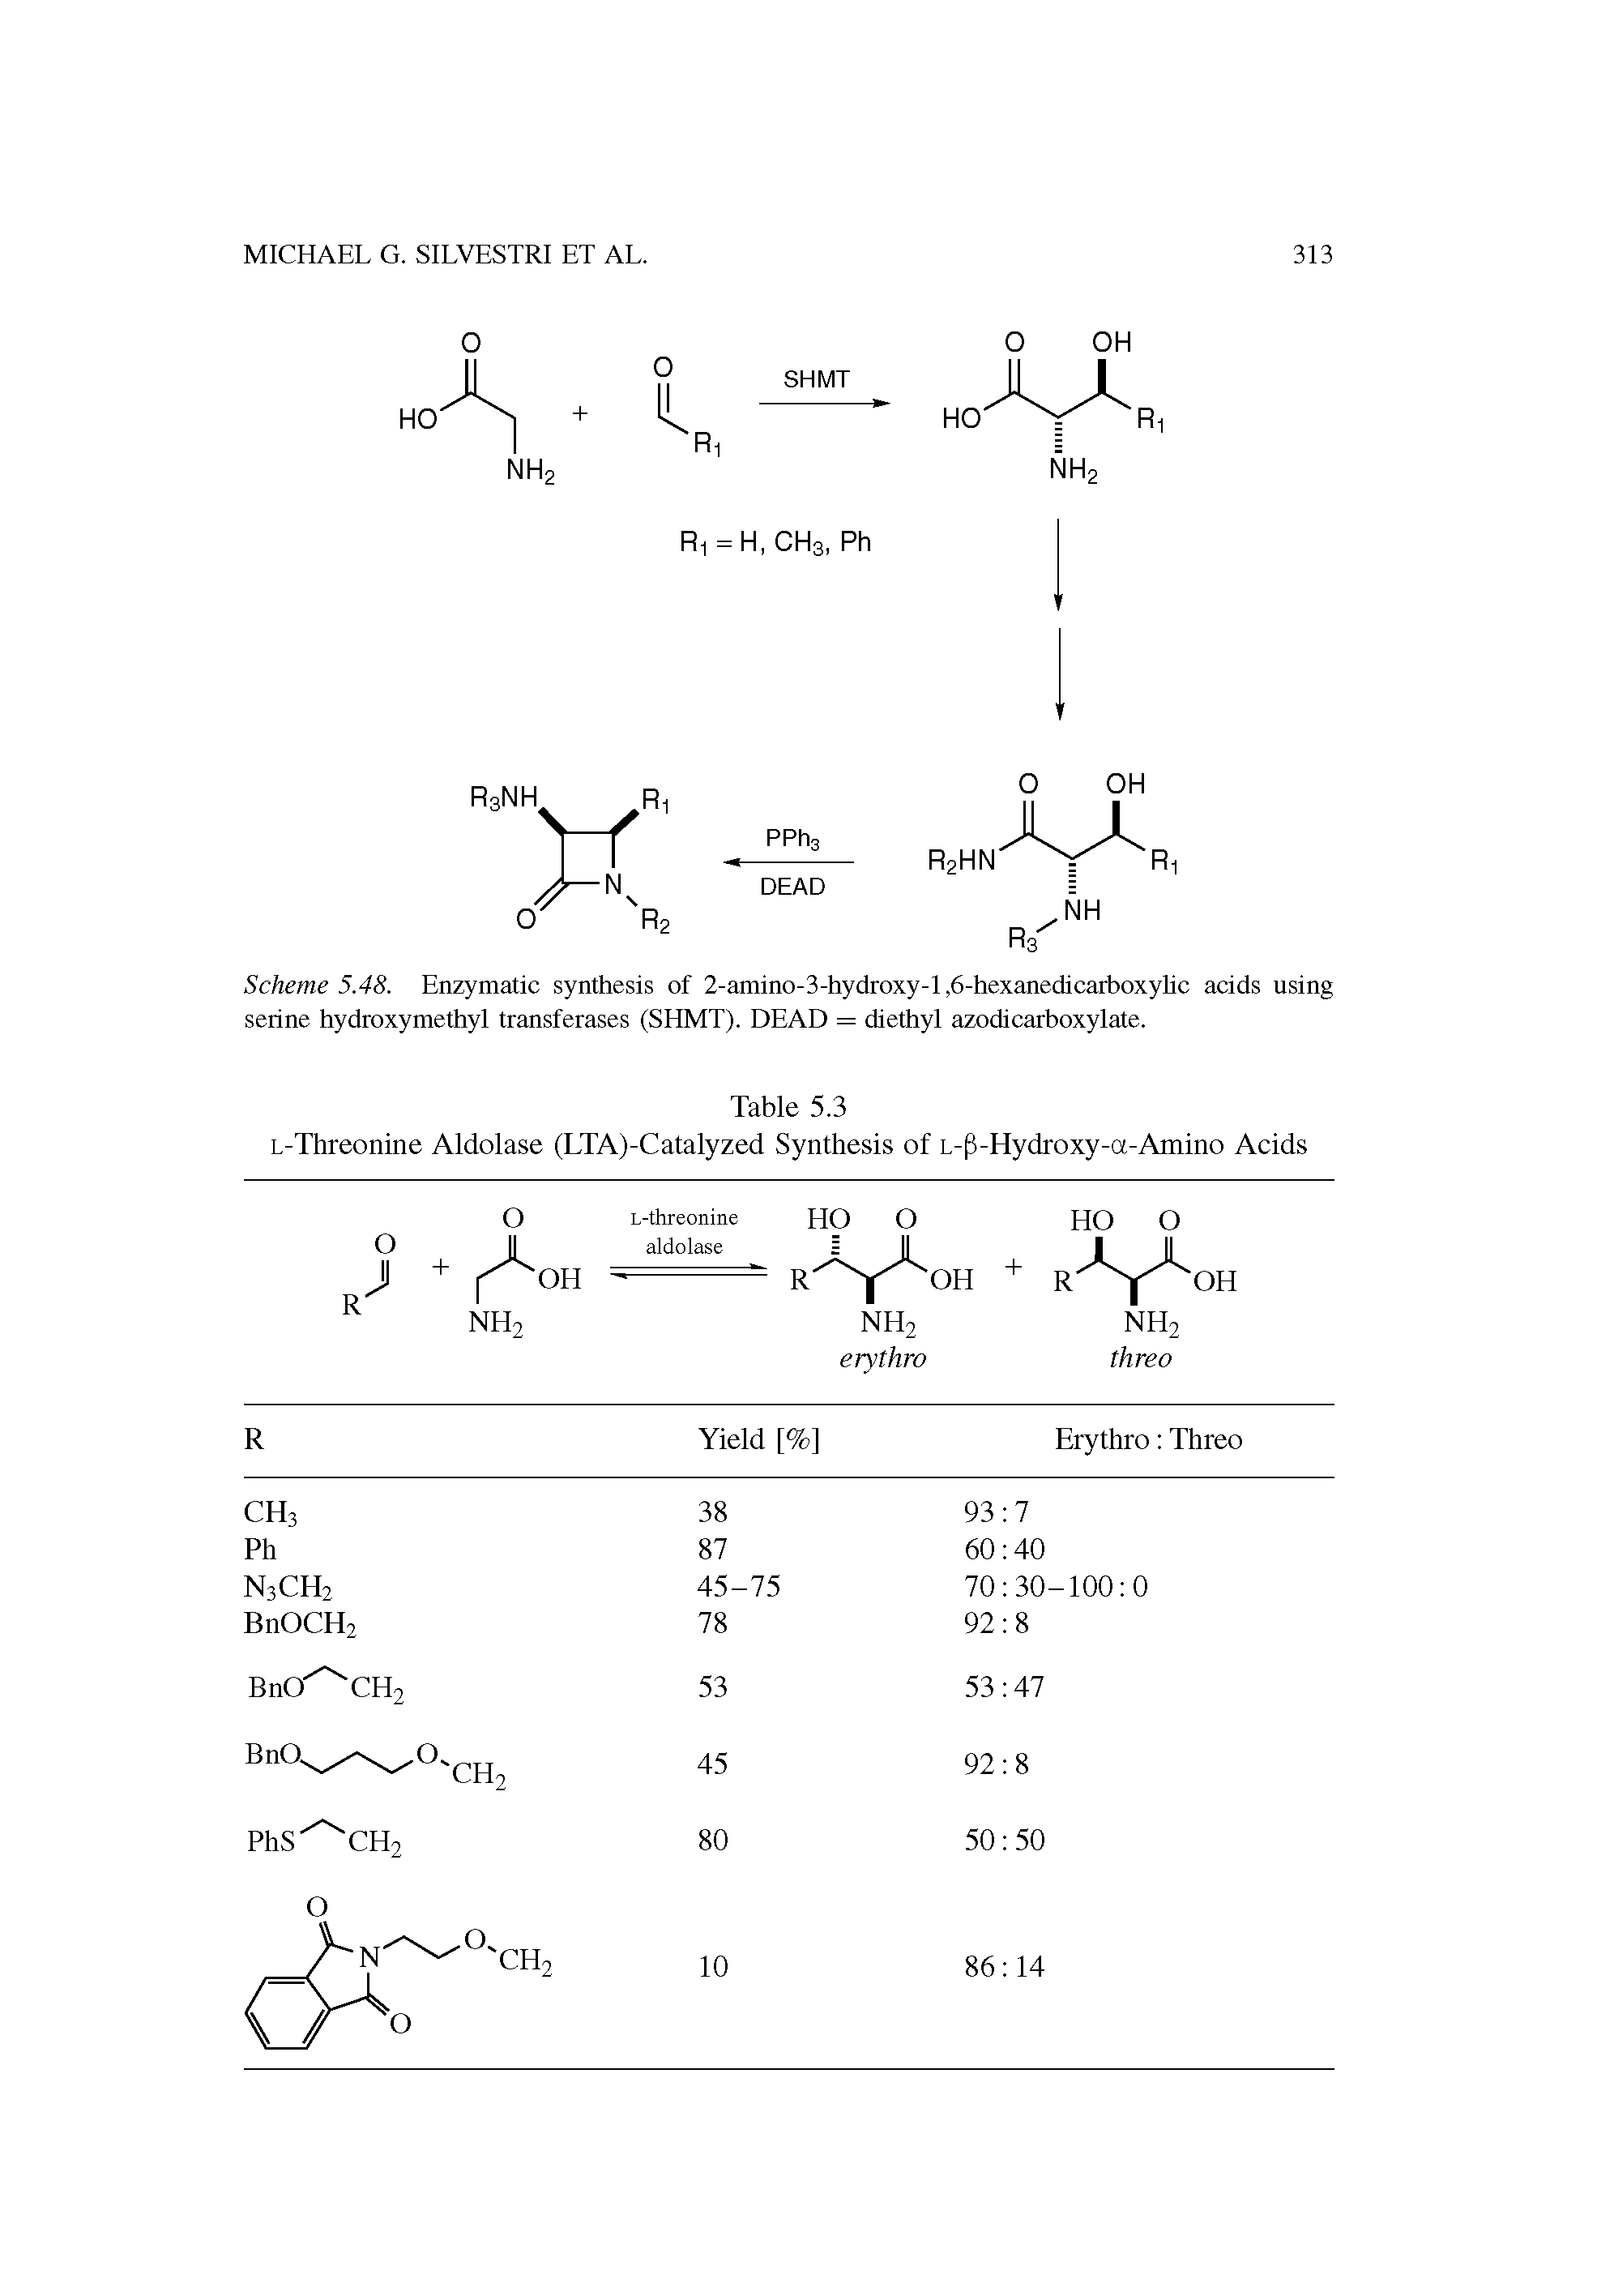 Scheme 5.48. Enzymatic synthesis of 2-amino-3-hydroxy-l, 6-hexanedicarboxylic acids using serine hydroxymethyl transferases (SHMT). DEAD = diethyl azodicarboxylate.